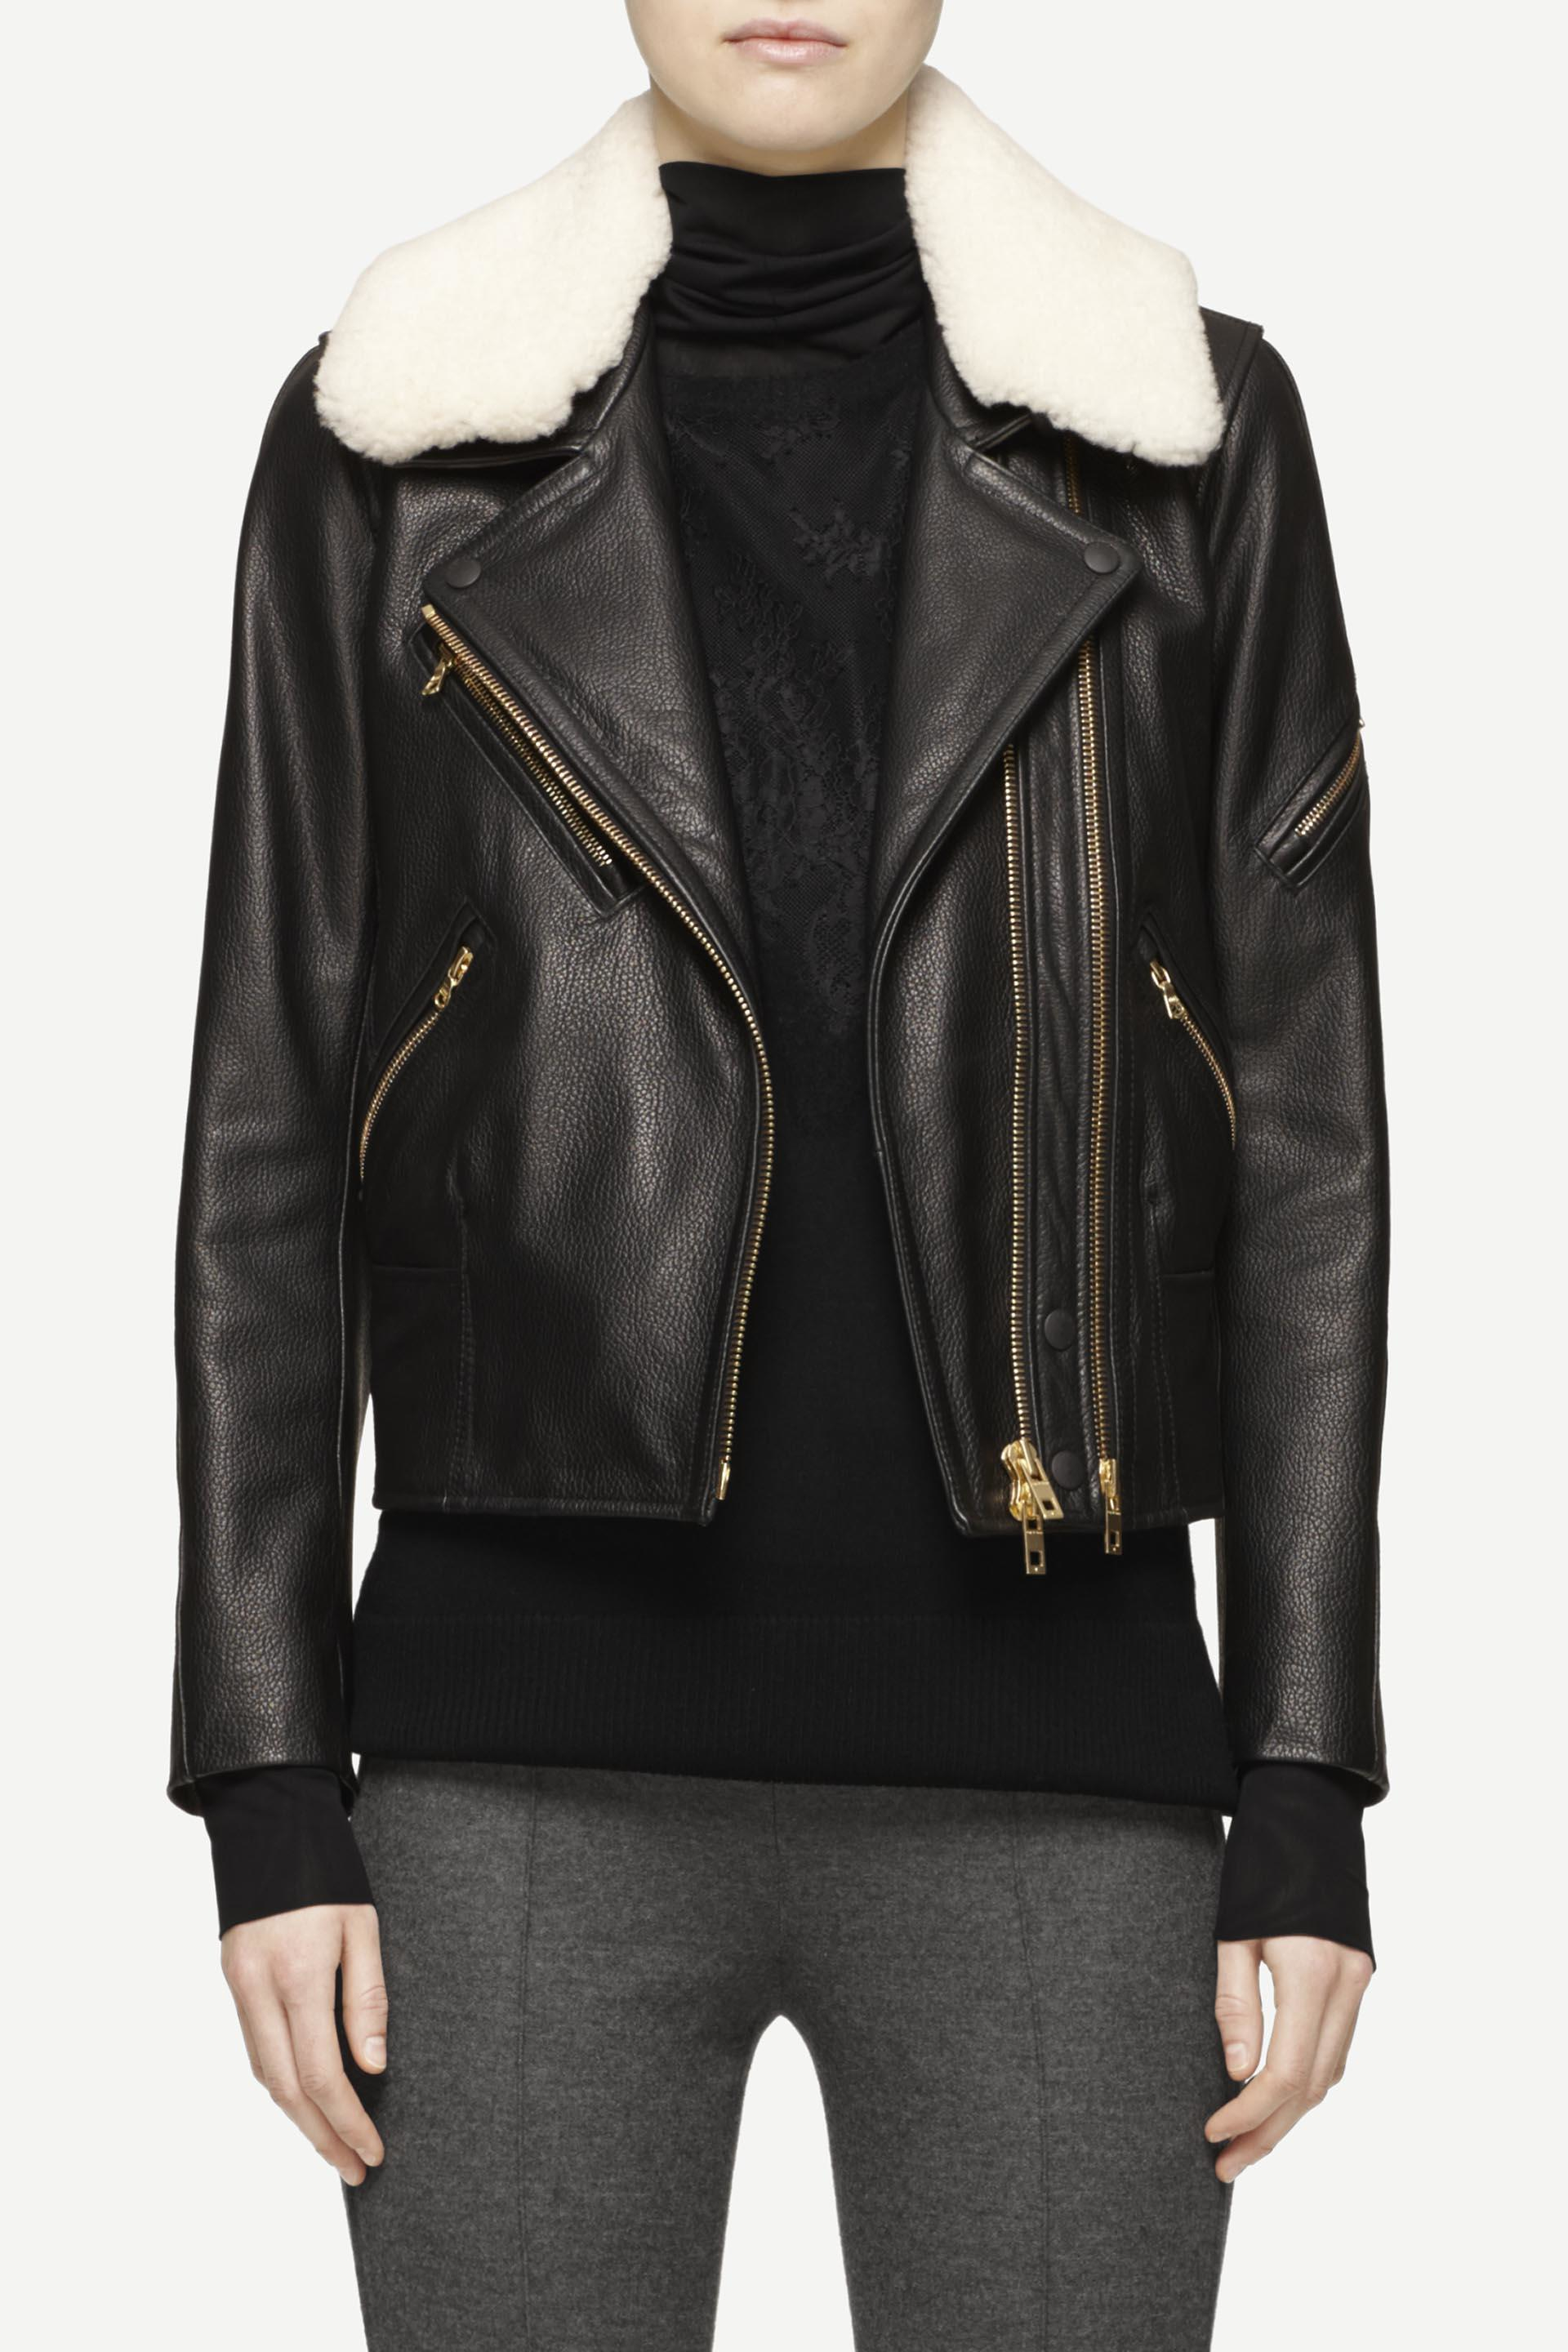 Rag & bone Minerva Leather Jacket in Black | Lyst